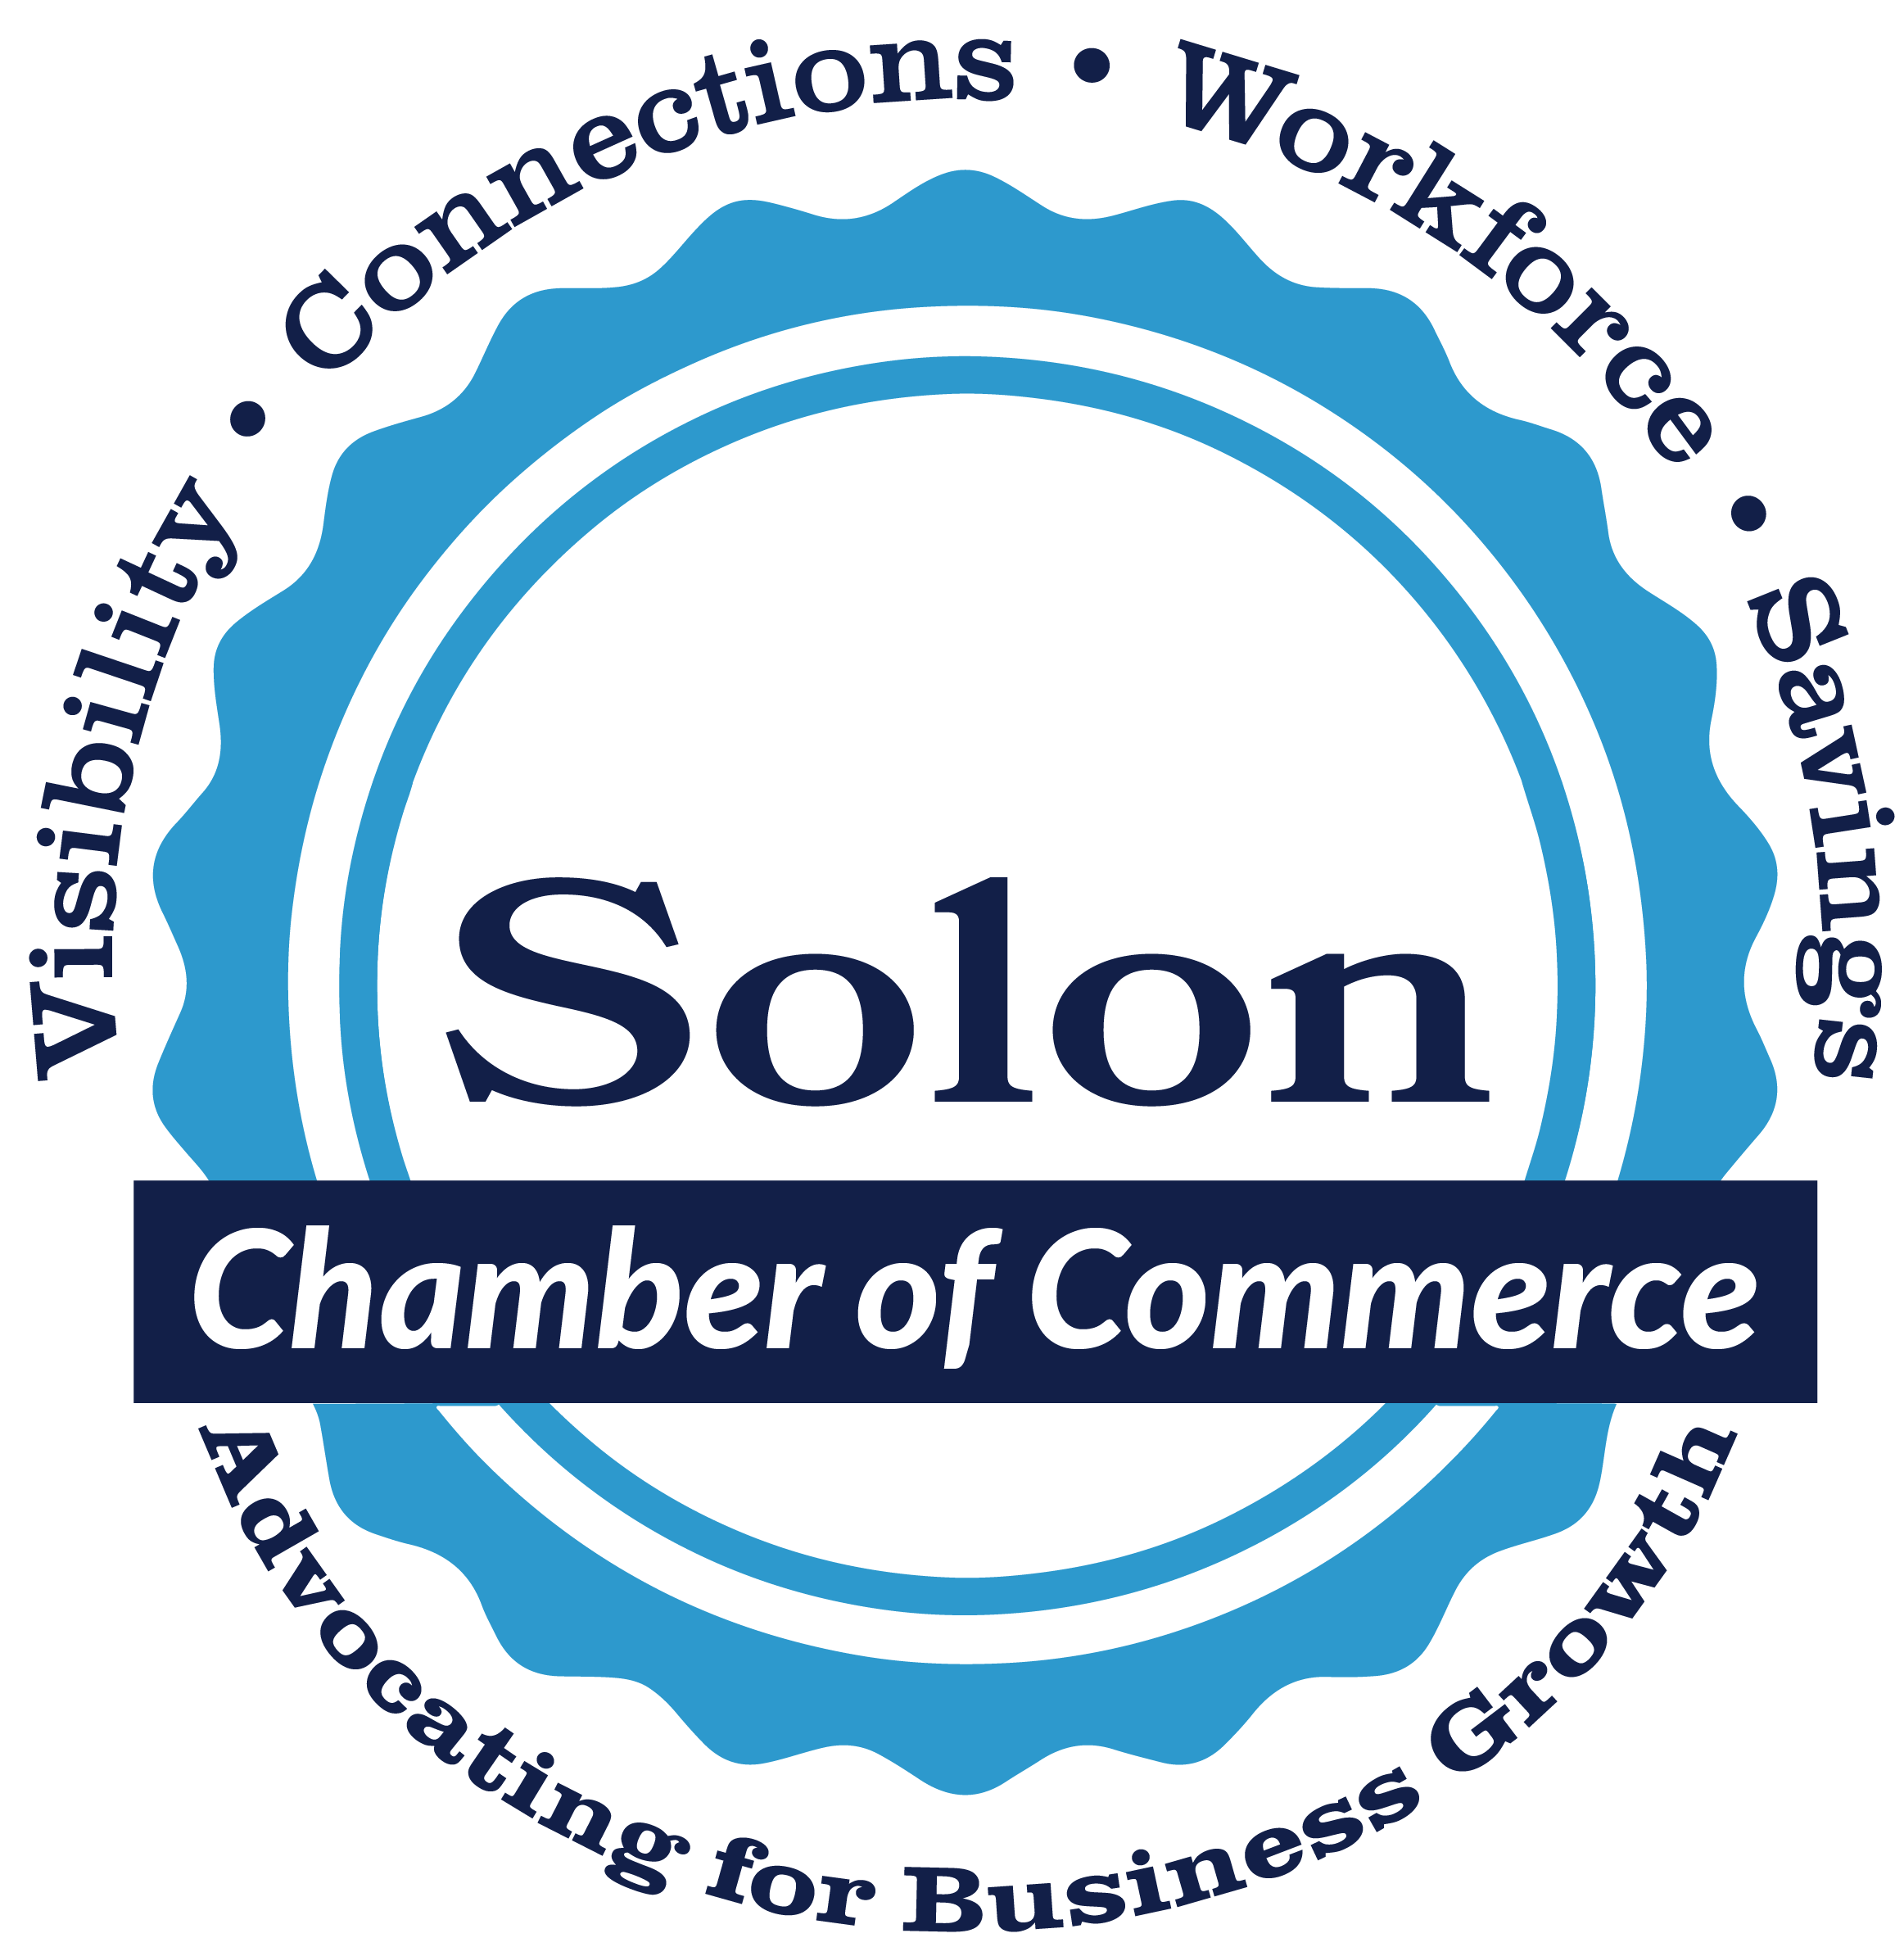 Solon Chamber of Commerce